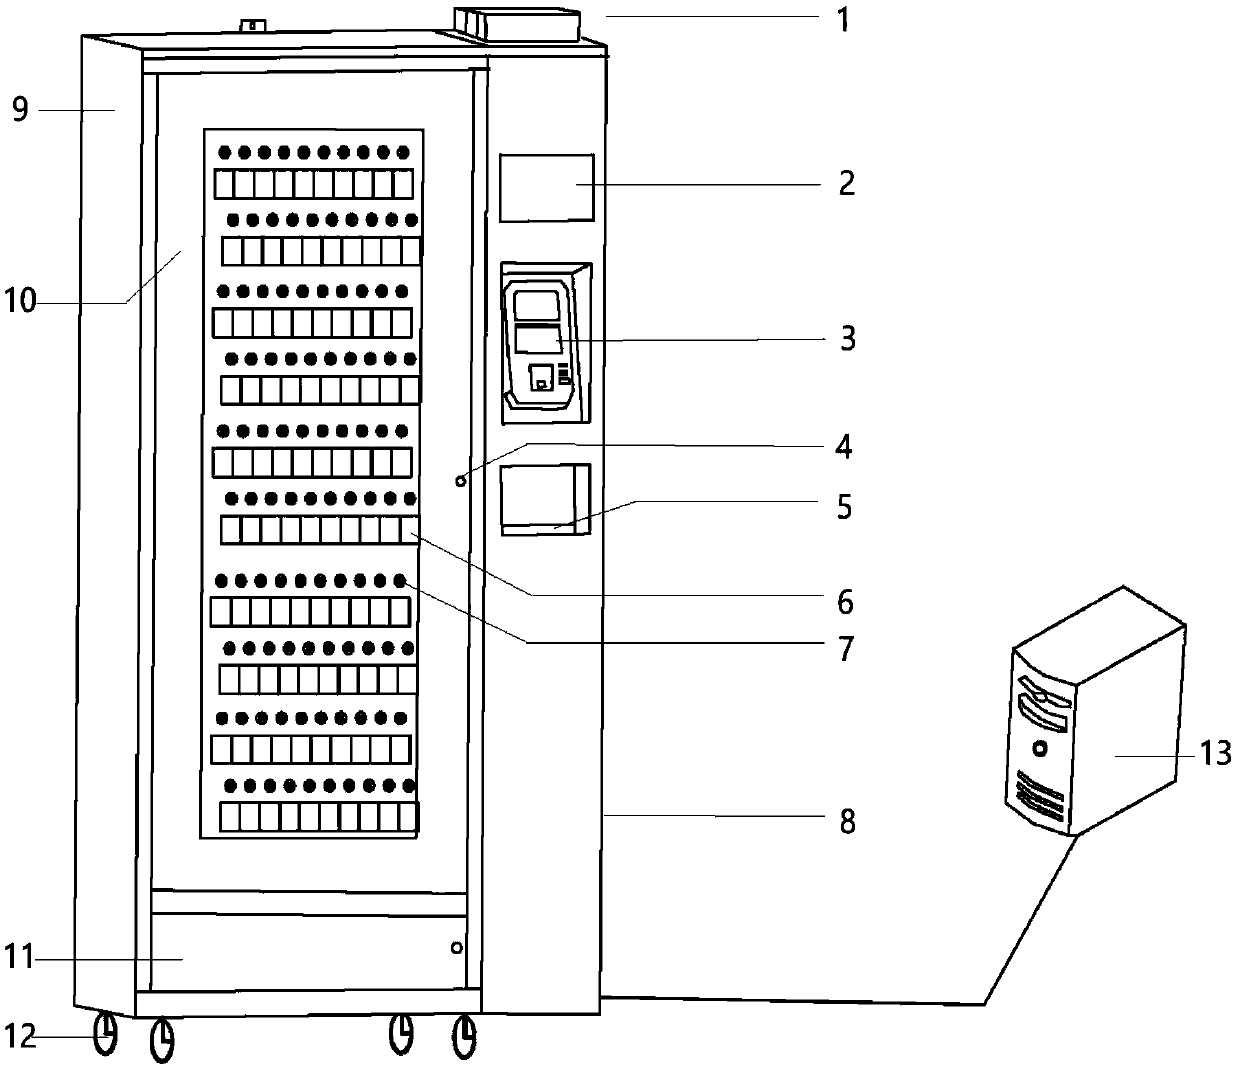 RFID-based intelligent personal dosimeter allocation cabinet